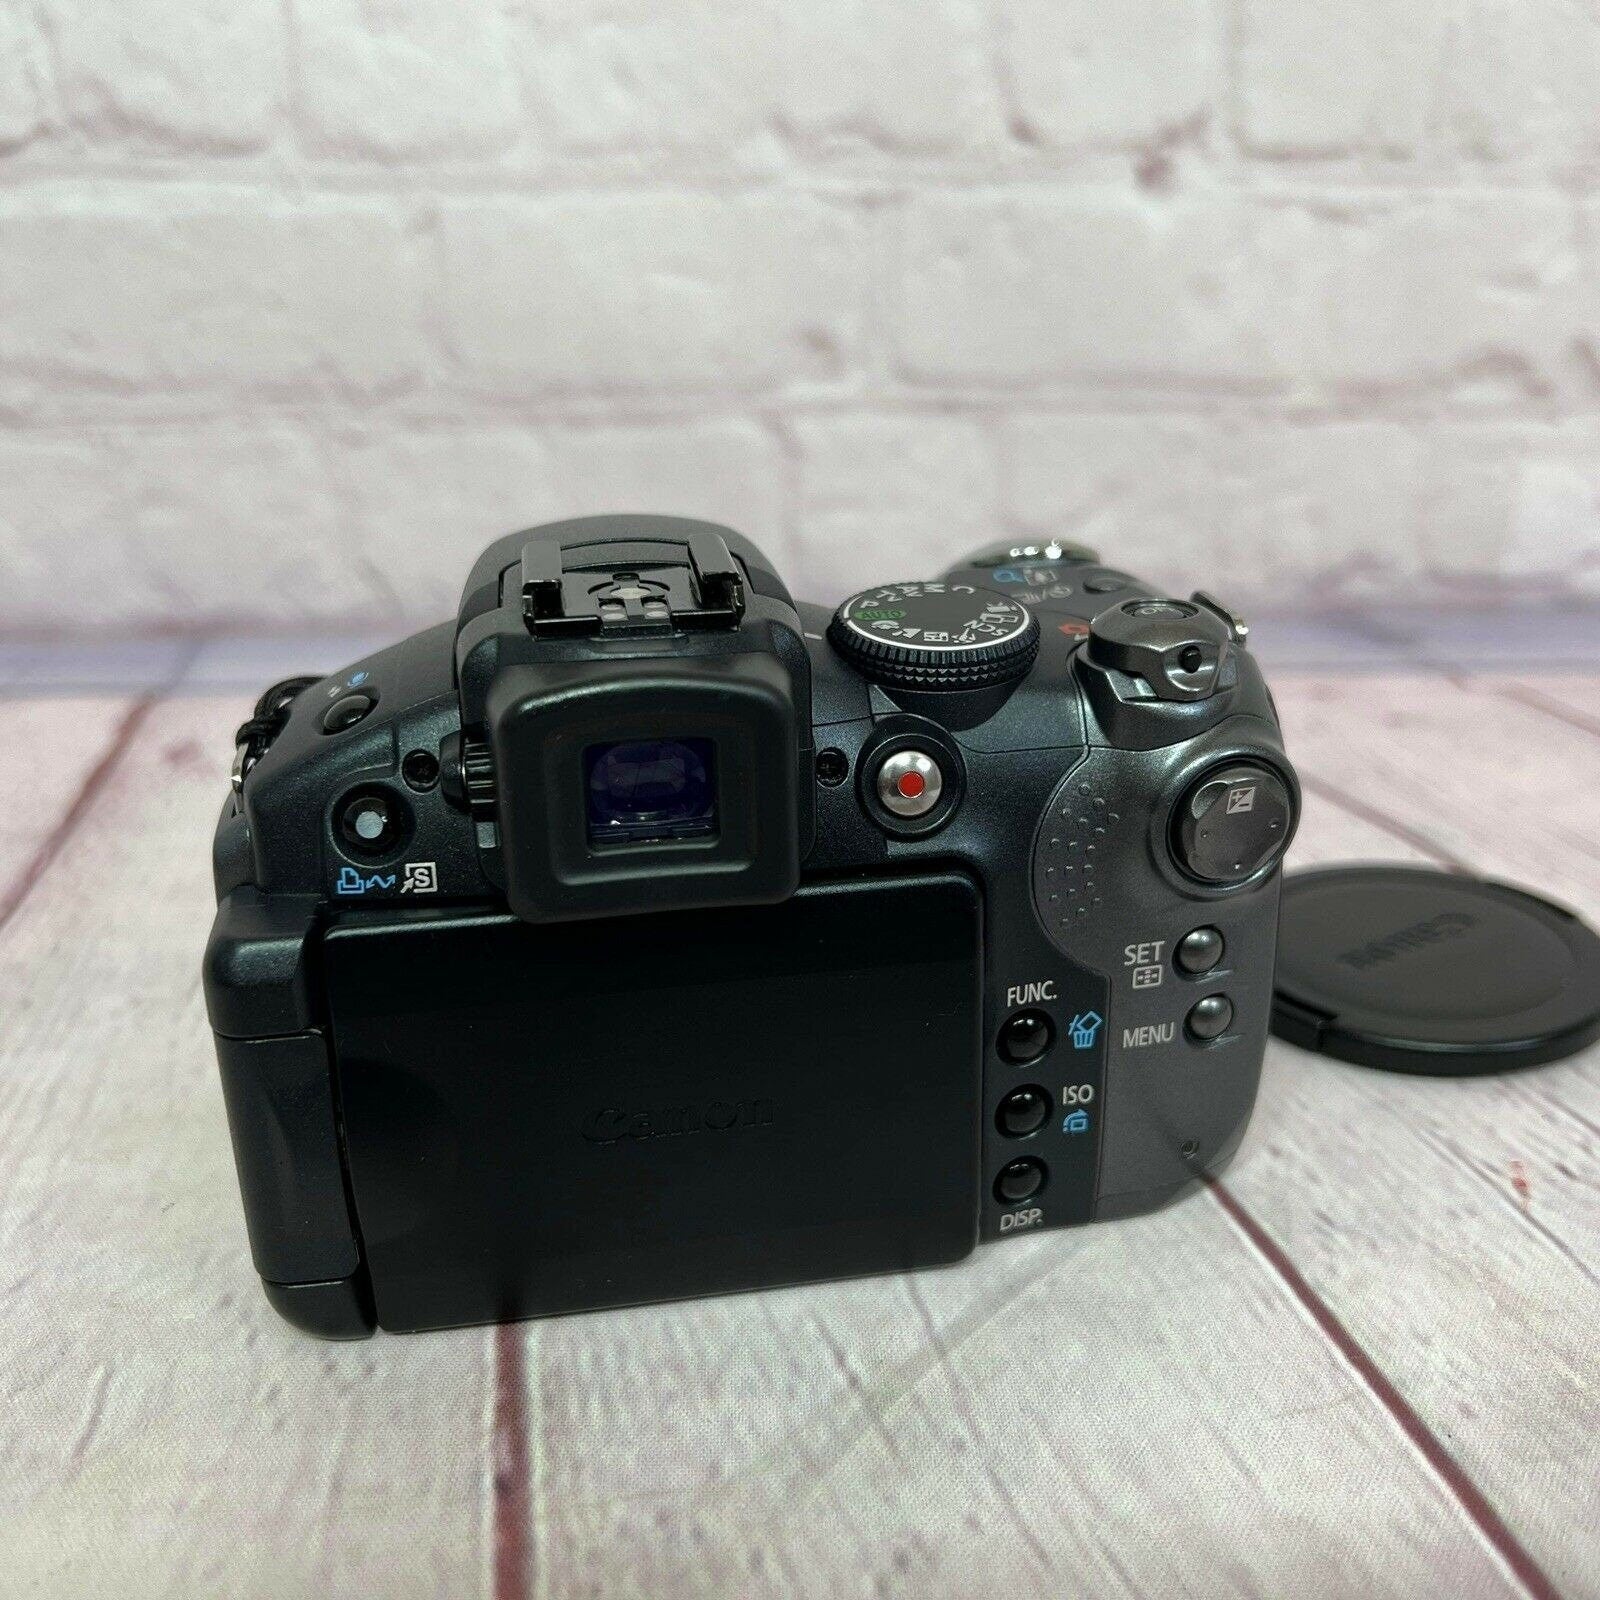 Canon PowerShot S5 IS 8.0MP 12x Optical Zoom Digital Camera